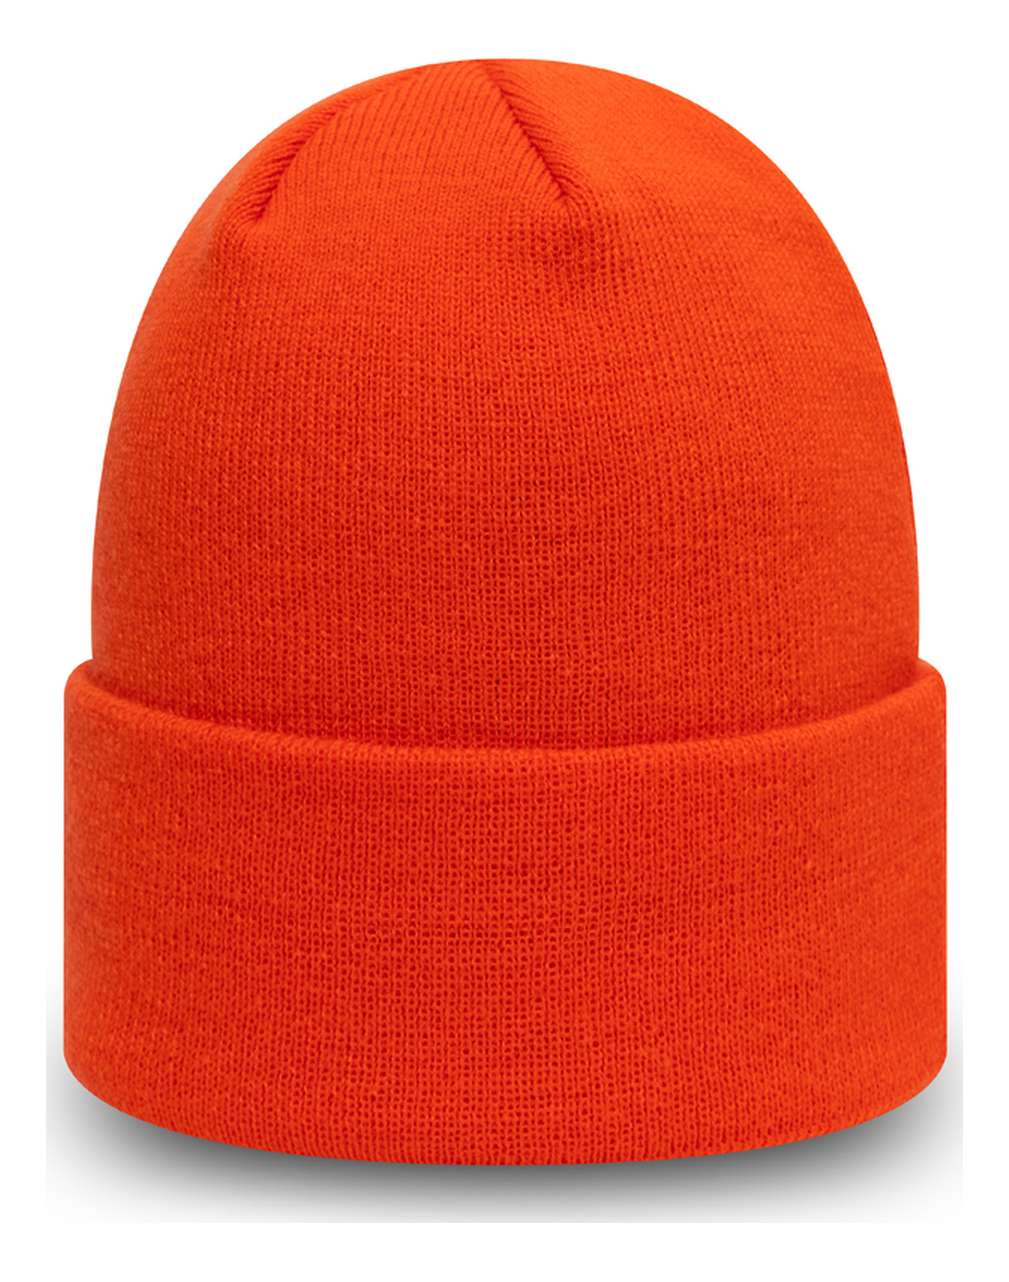 New Era - MLB Detroit Tigers League Essential Knit Cuff Beanie - Orange